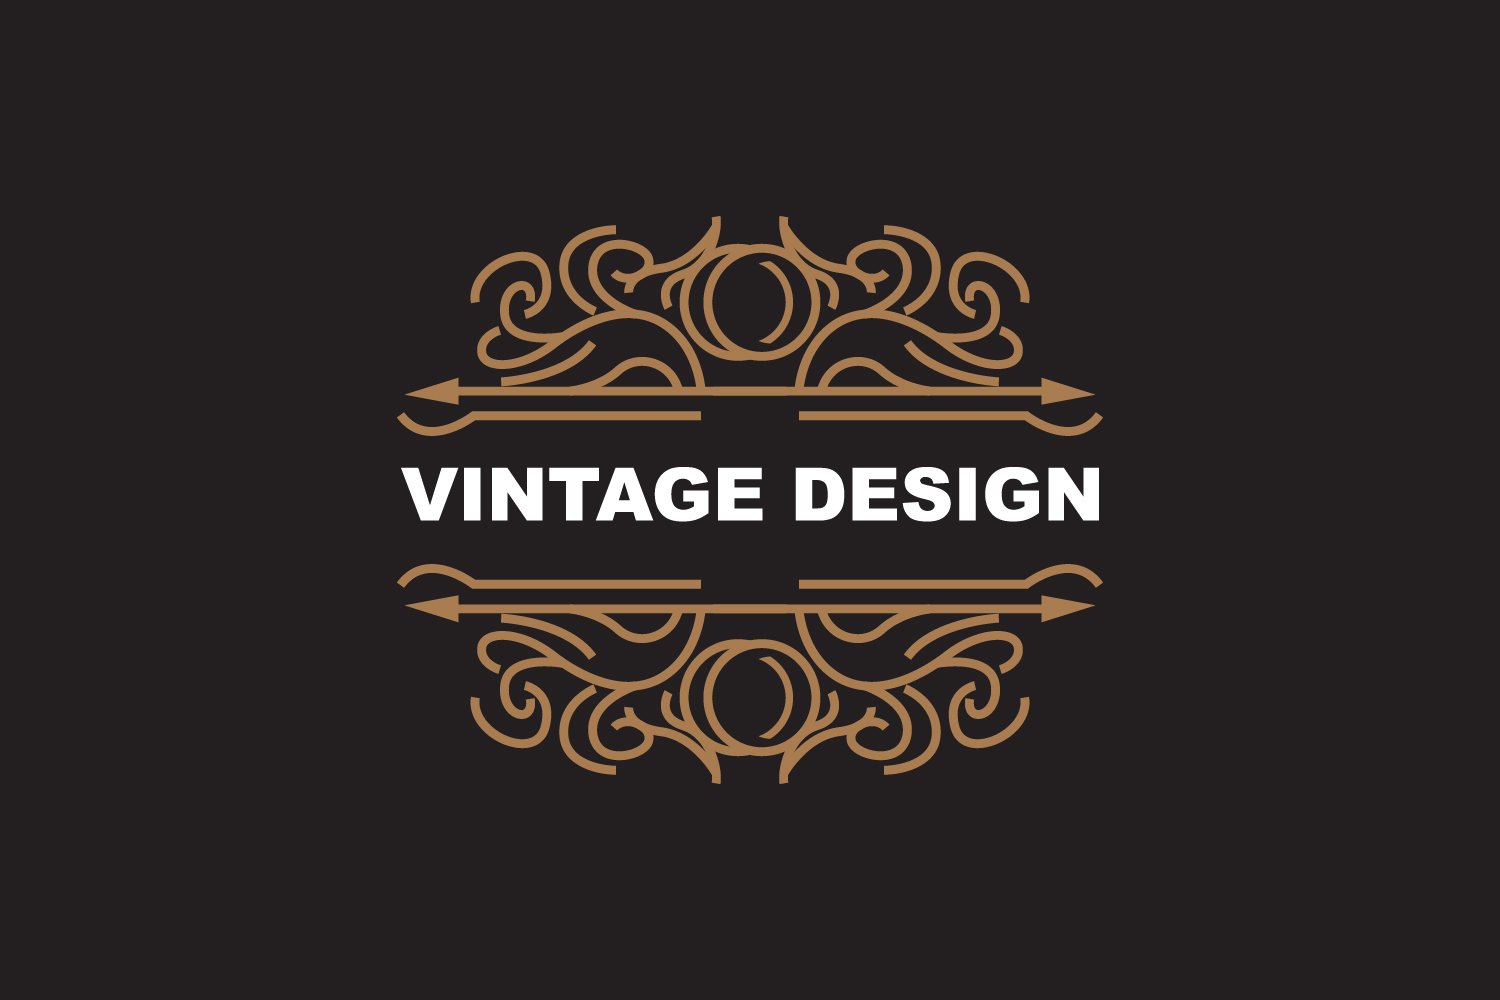 Retro Vintage Design Minimalist Ornament Logo V5